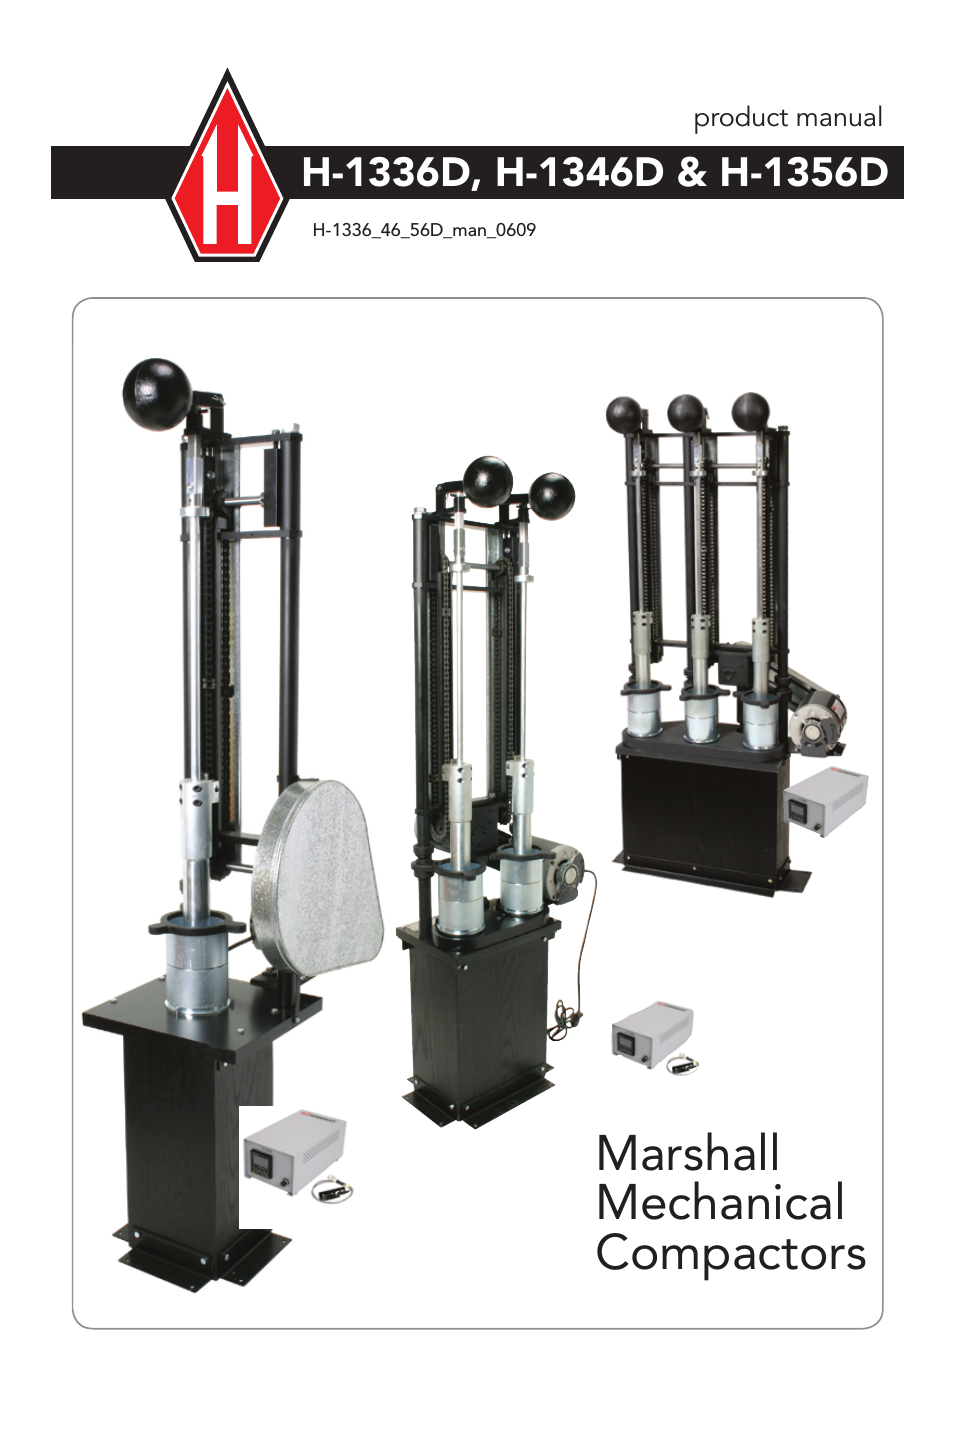 H-1336D Marshall Mechanical Compactors